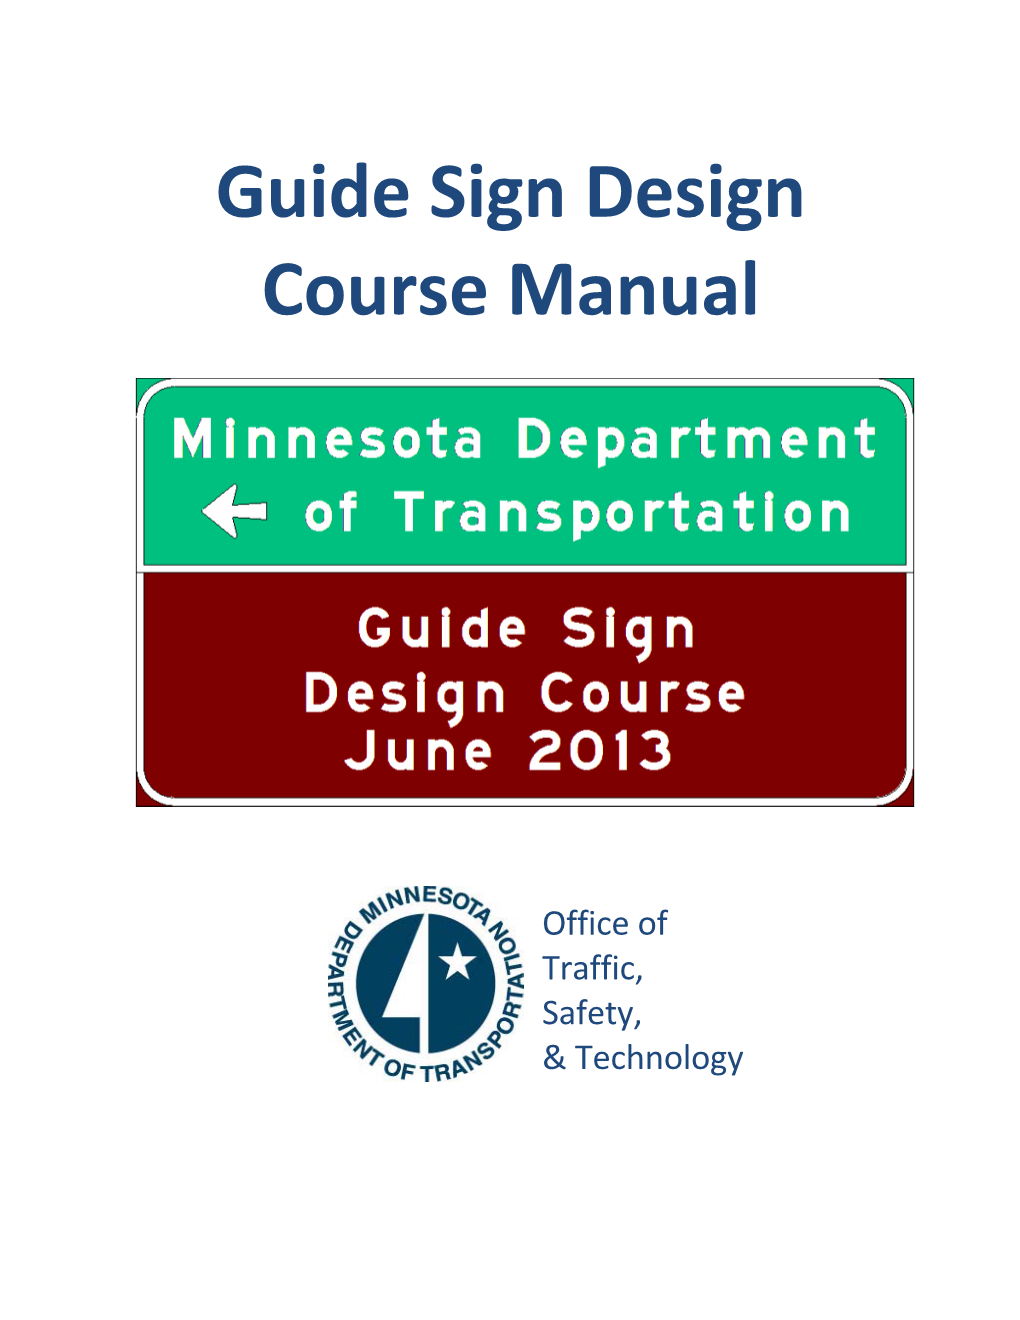 Guide Sign Design Course Manual